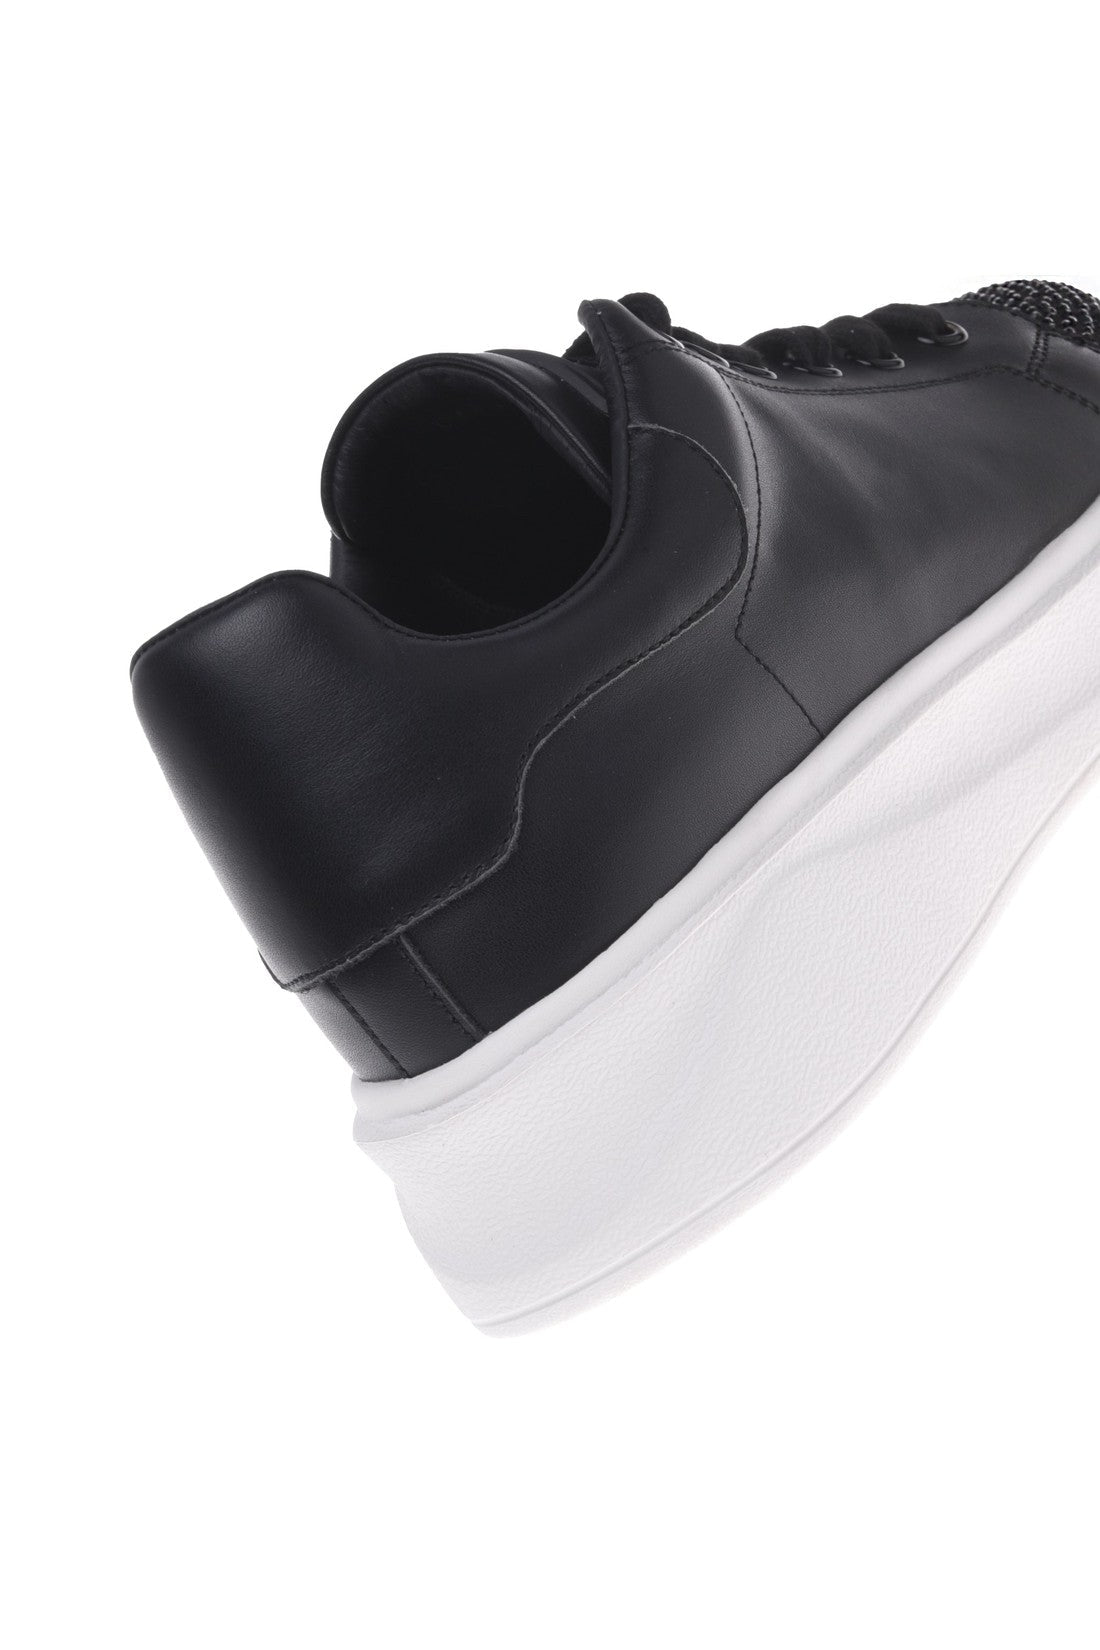 BALDININI-OUTLET-SALE-Sneaker-in-black-calfskin-with-rhinestones-Sneaker-ARCHIVE-COLLECTION-4_78af3ec7-3753-4f7d-90d2-2e2e665925fd.jpg